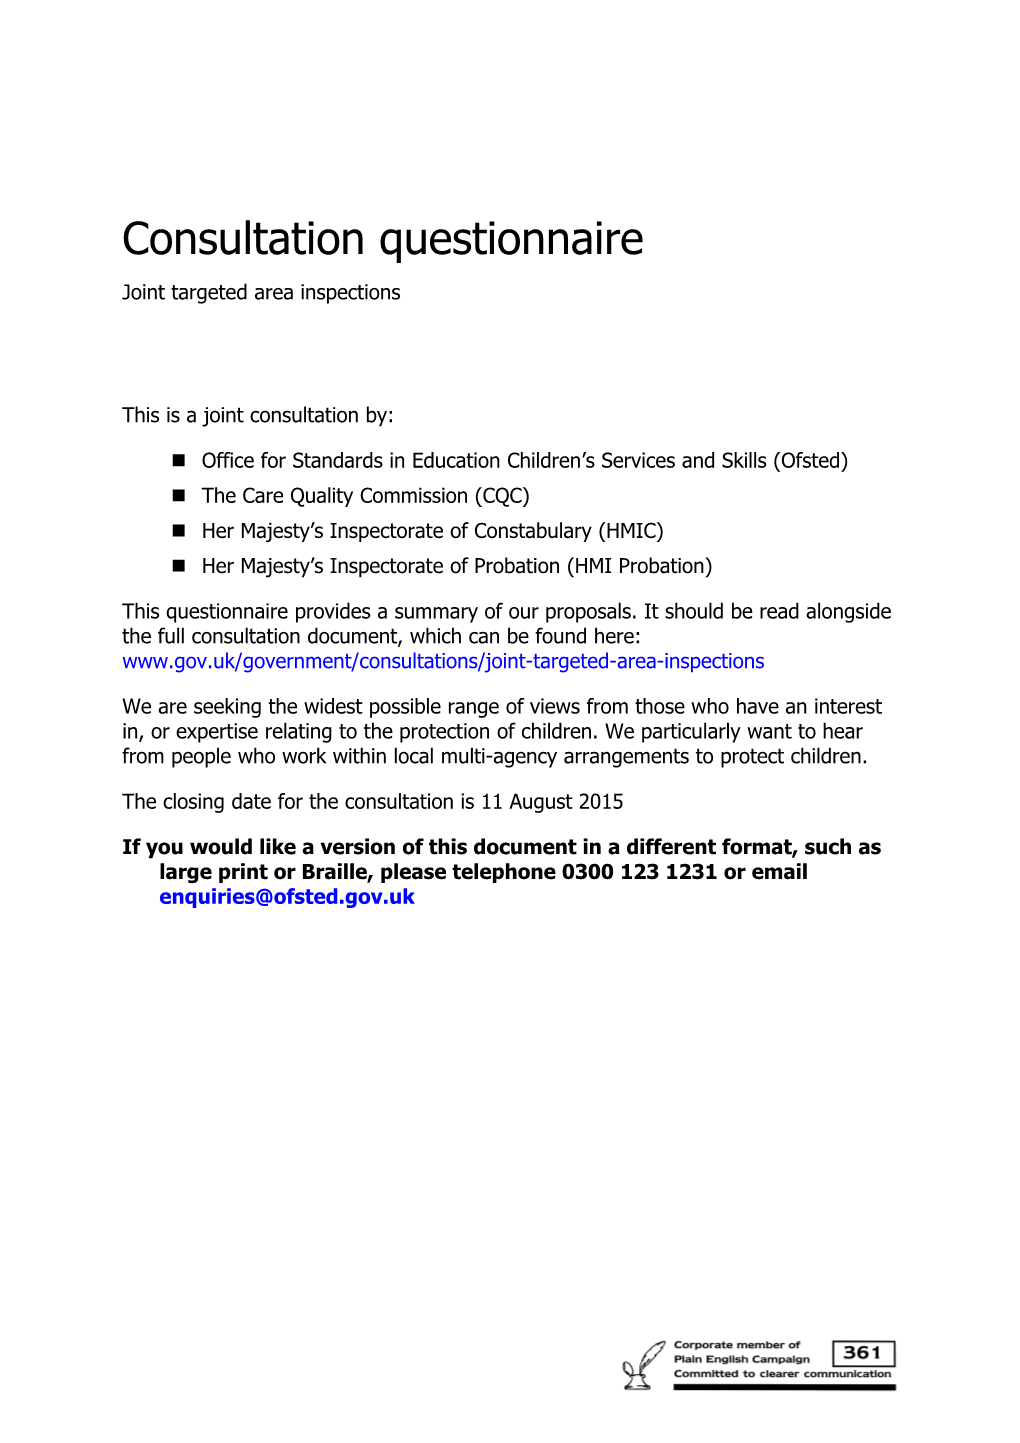 Consultation - JTAI - Questionnaire